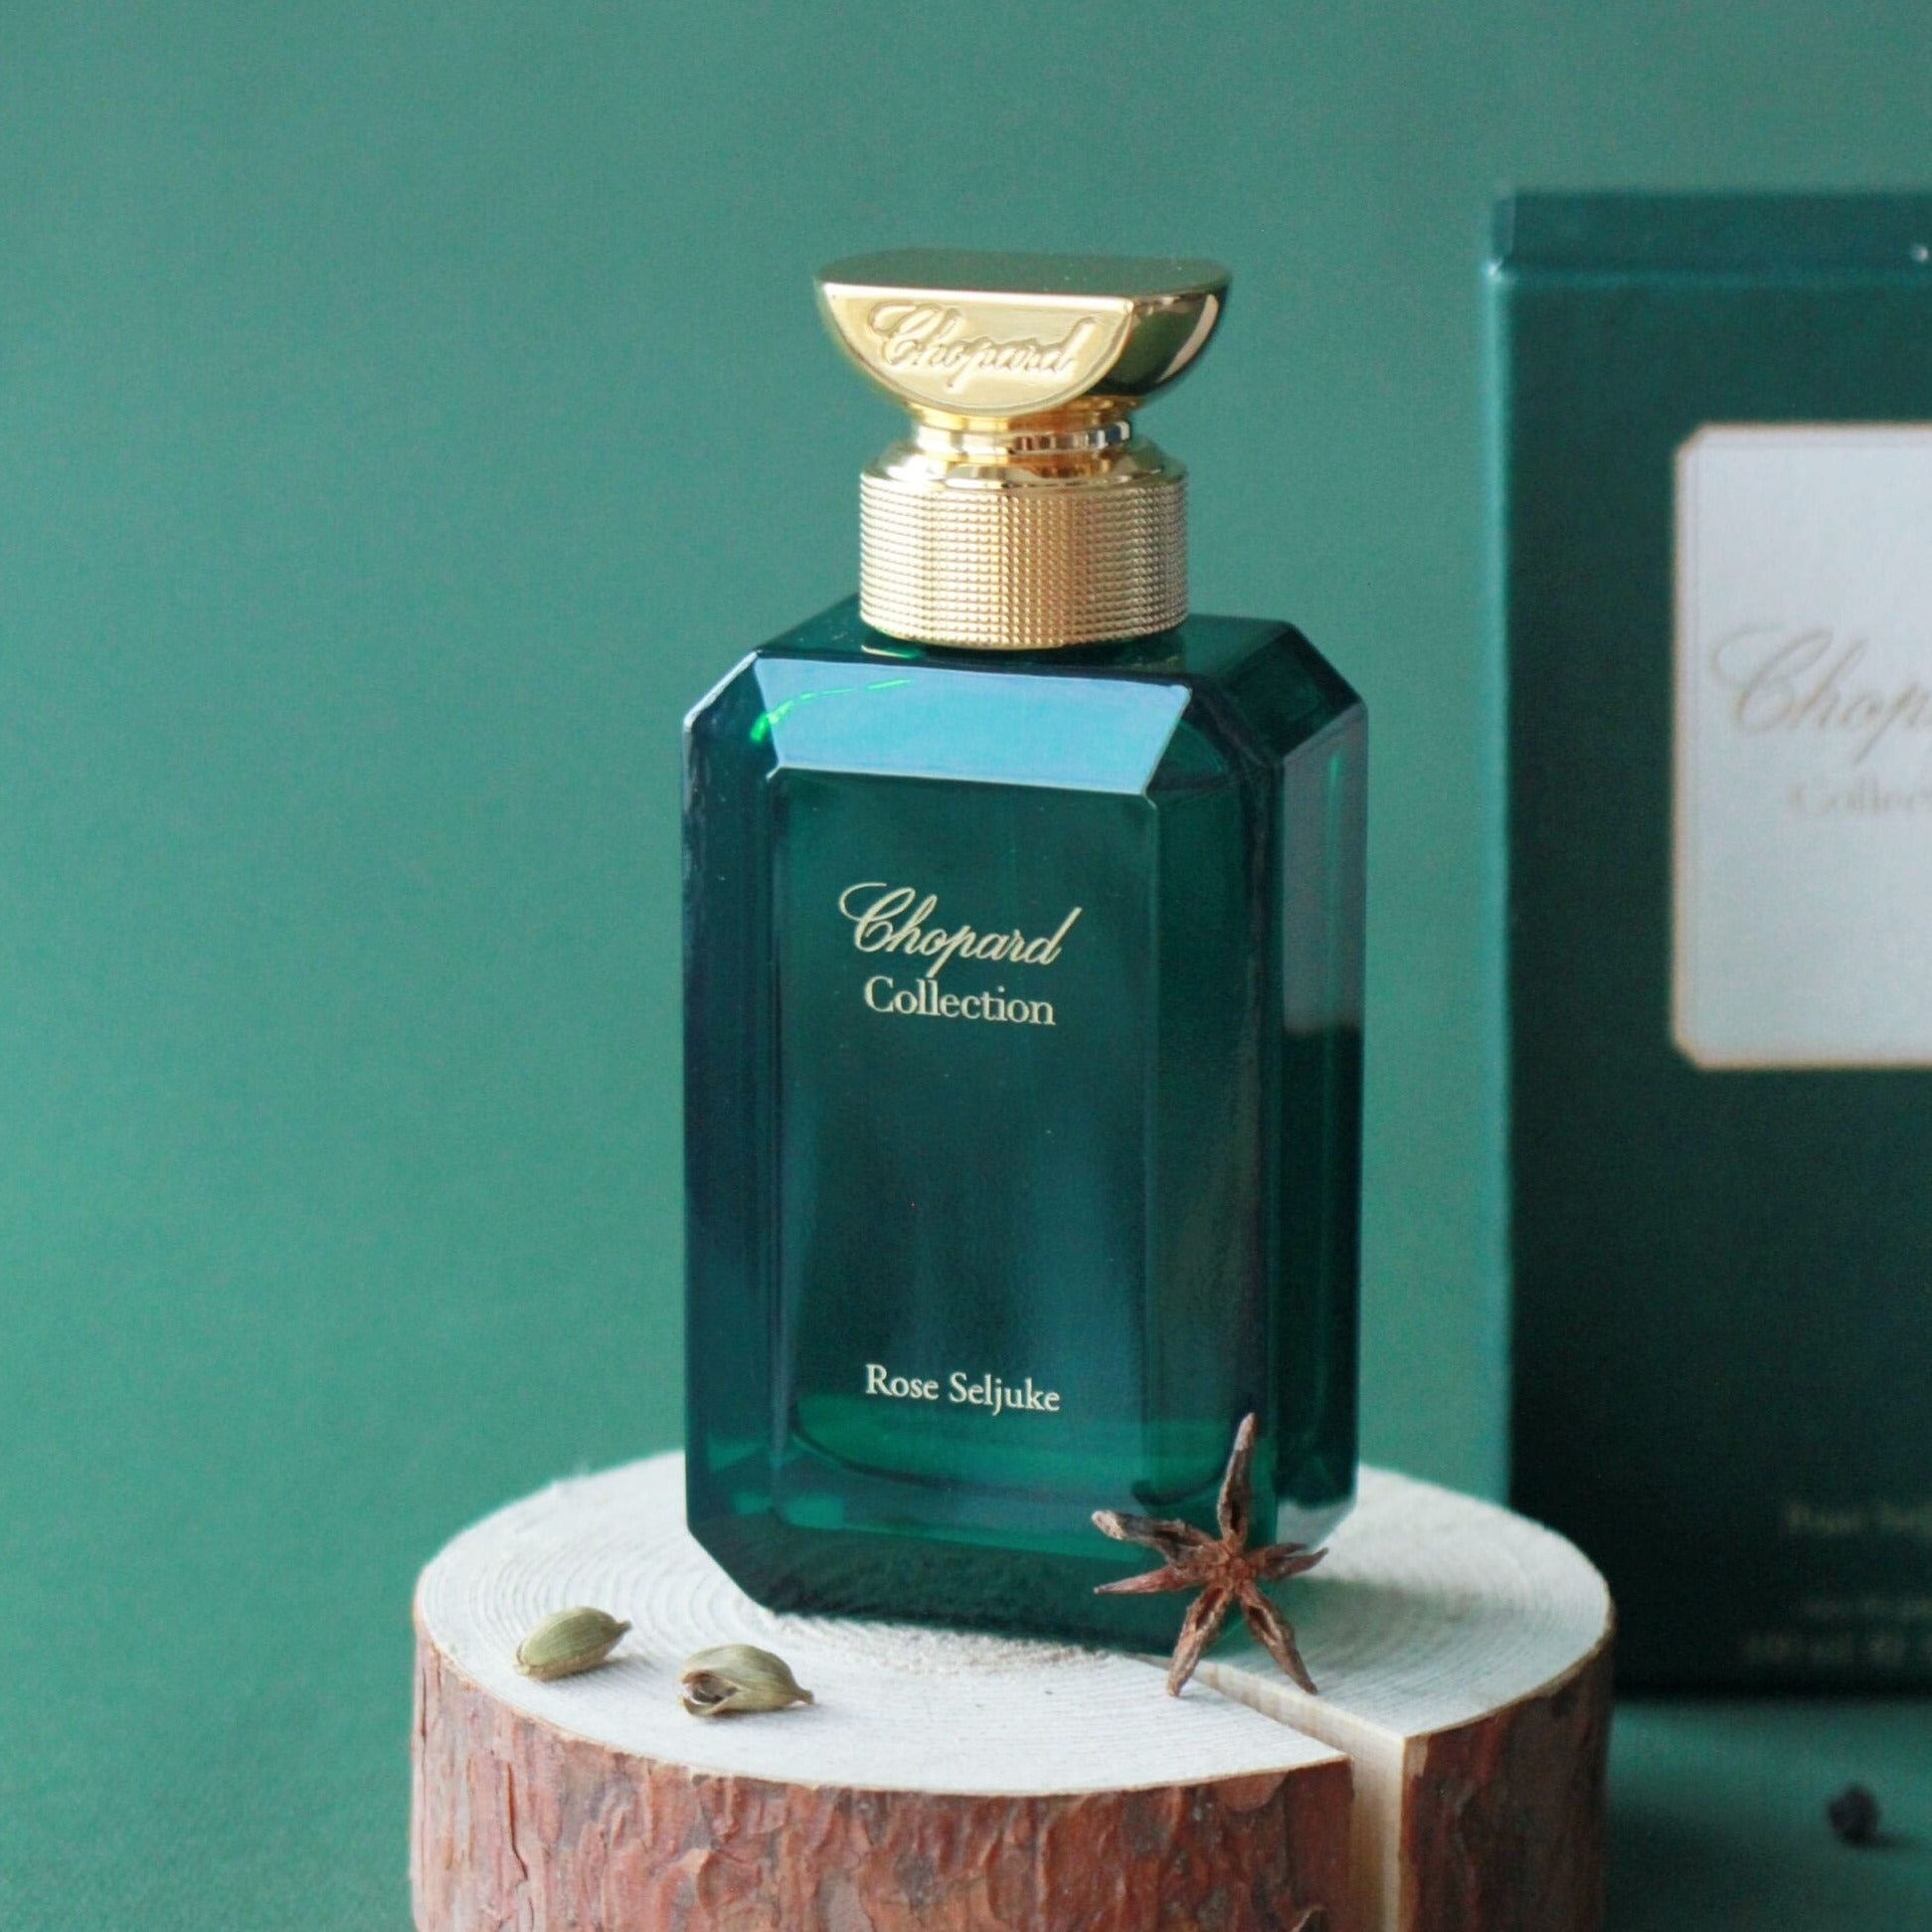 Chopard Collection Rose Seljuke EDP | My Perfume Shop Australia